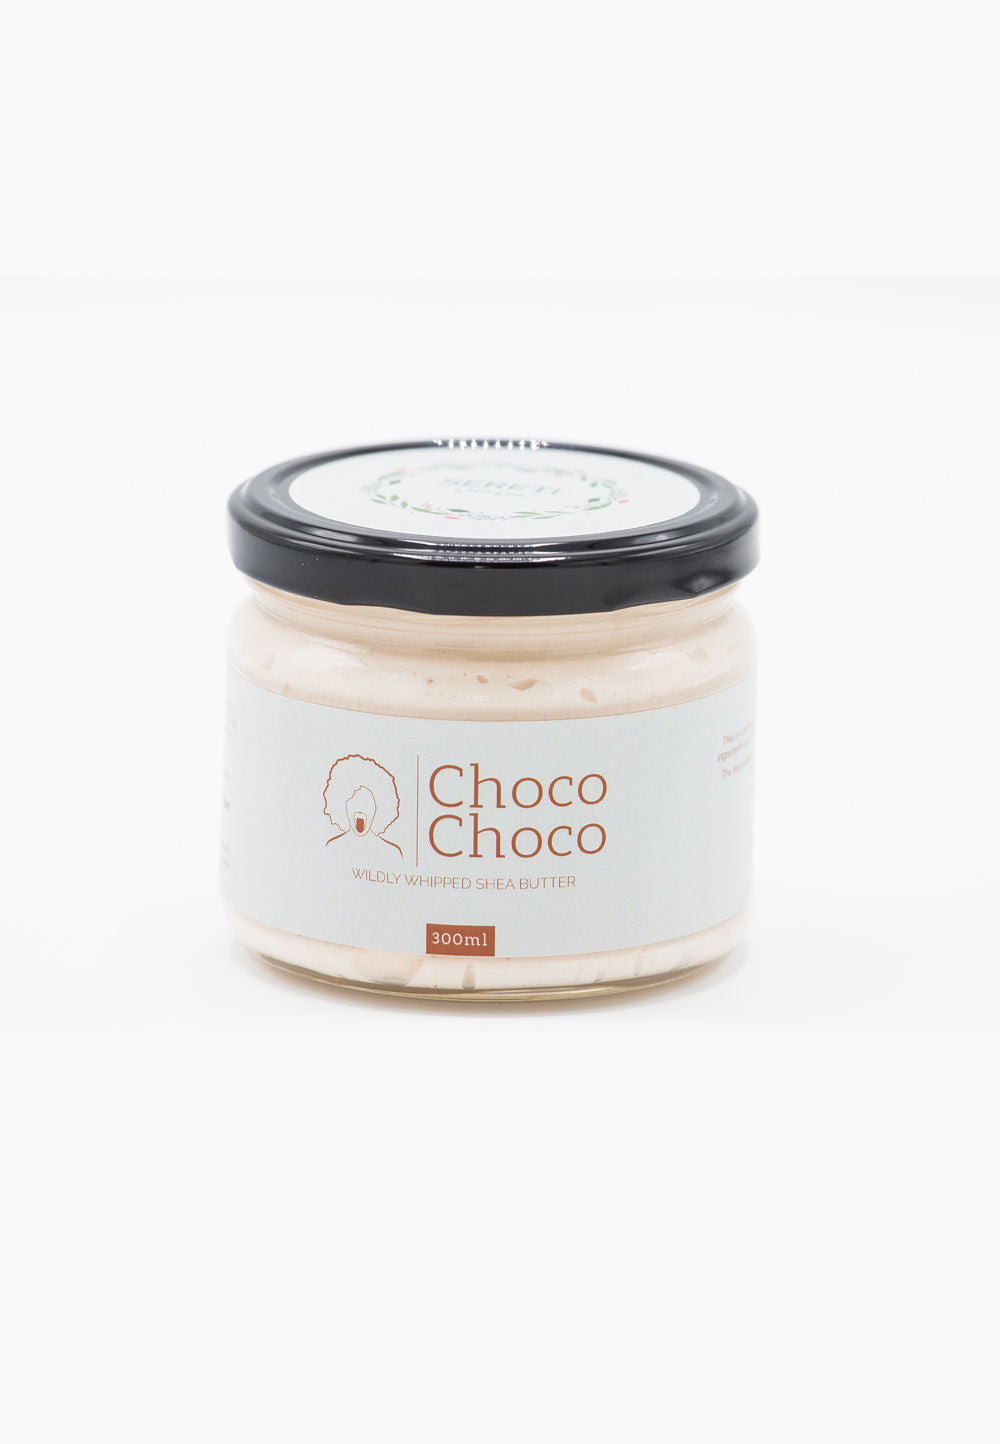 Choco Choco Body Butter